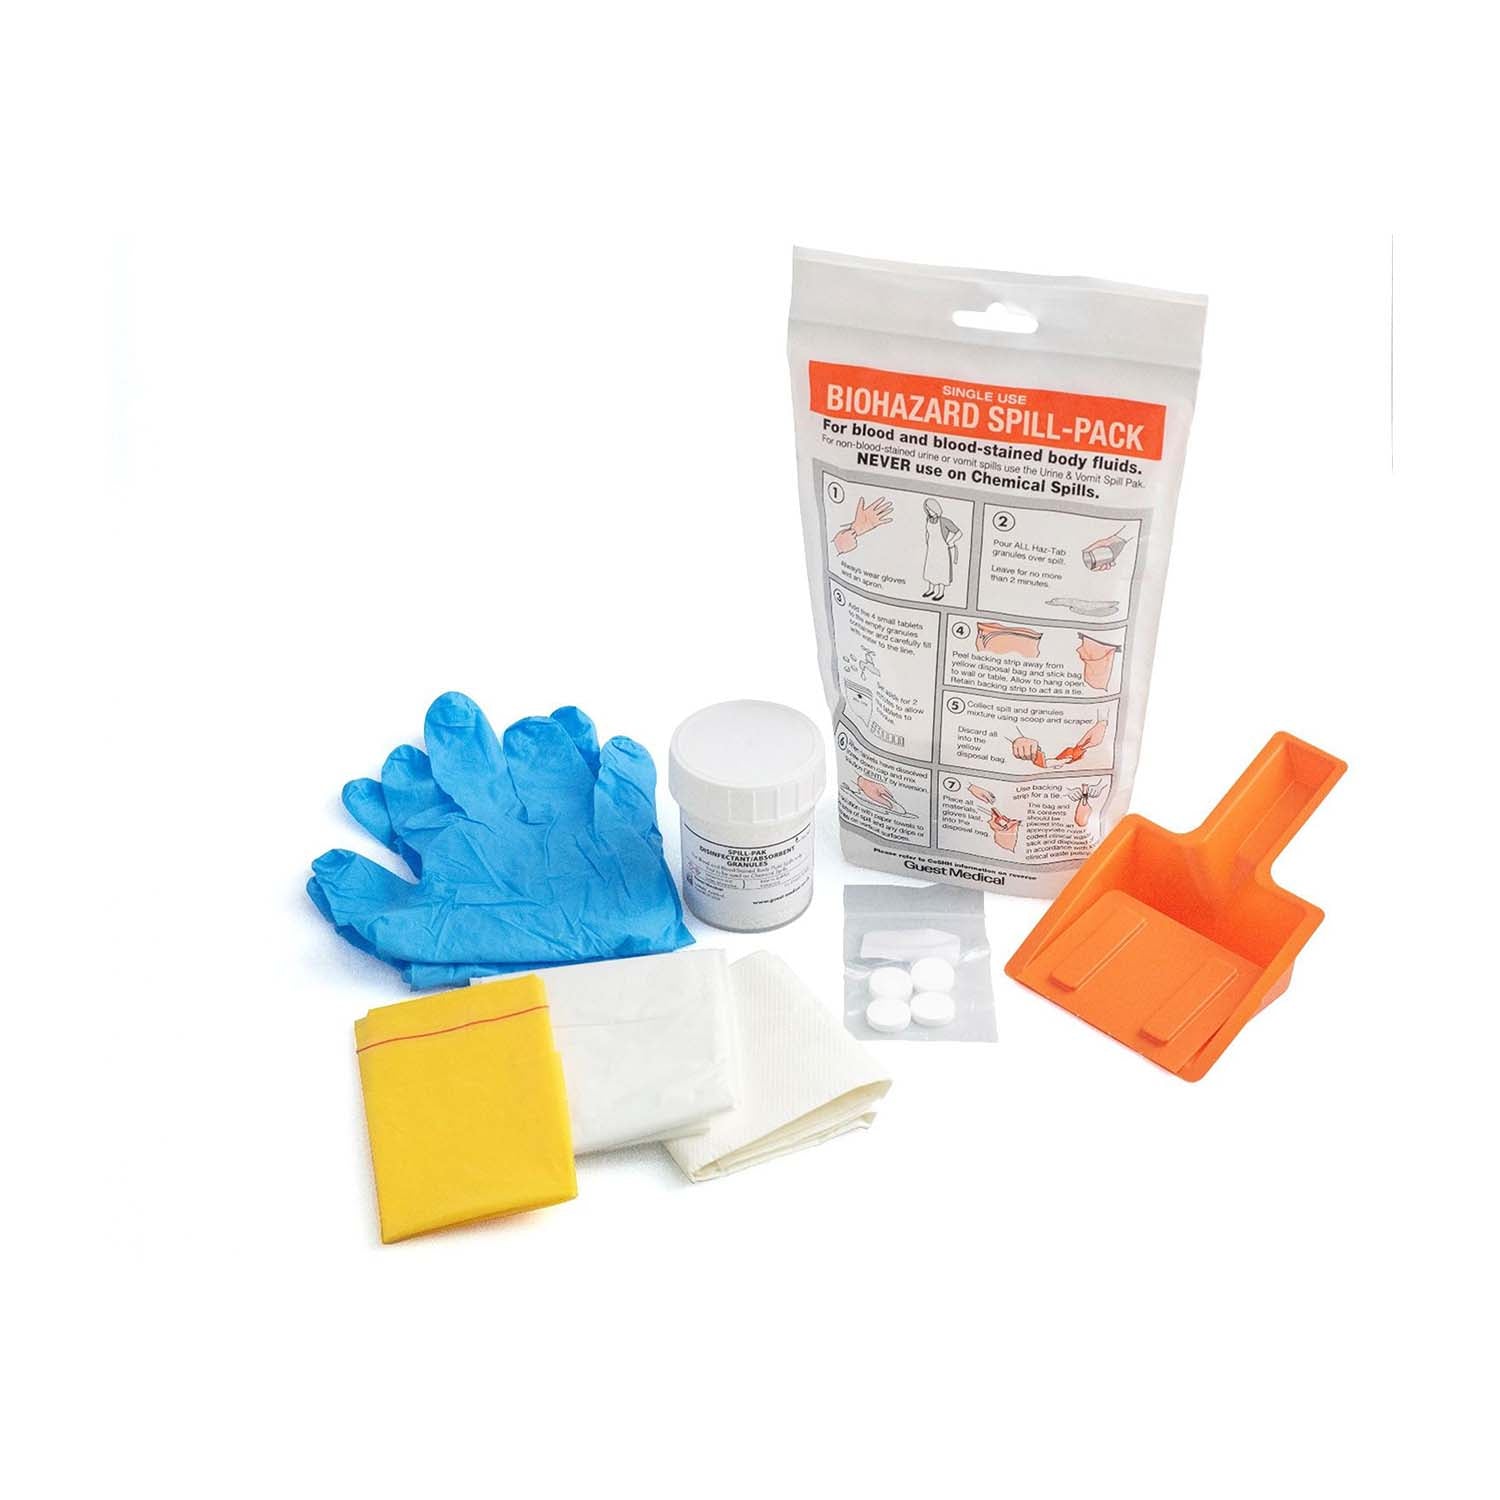 Biohazard Spills Kit | Spill-Pak | Single